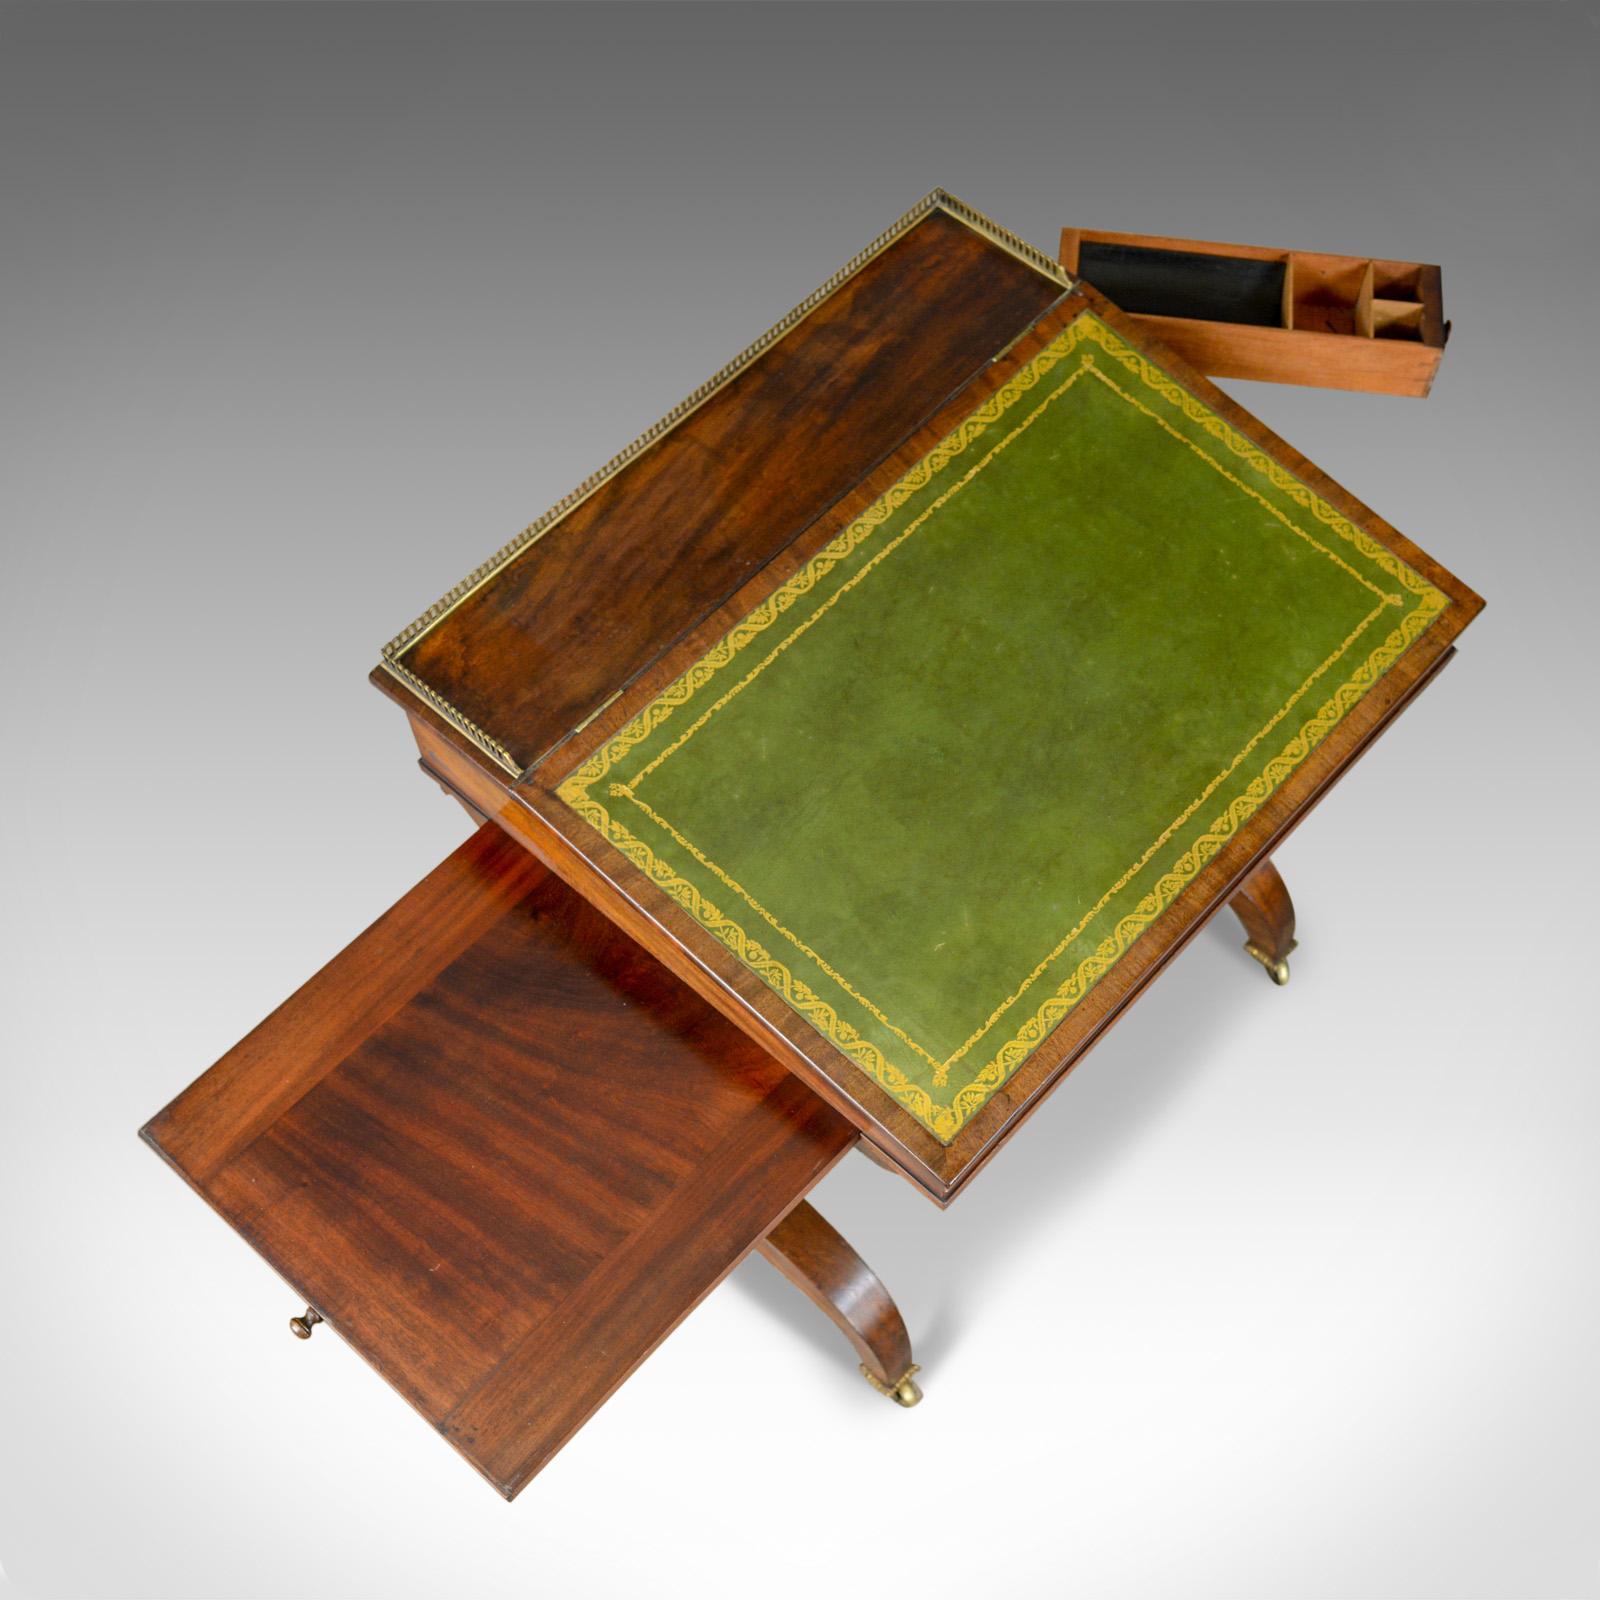 Antique Writing Table, English, Regency, Mahogany, Davenport, circa 1820 For Sale 2